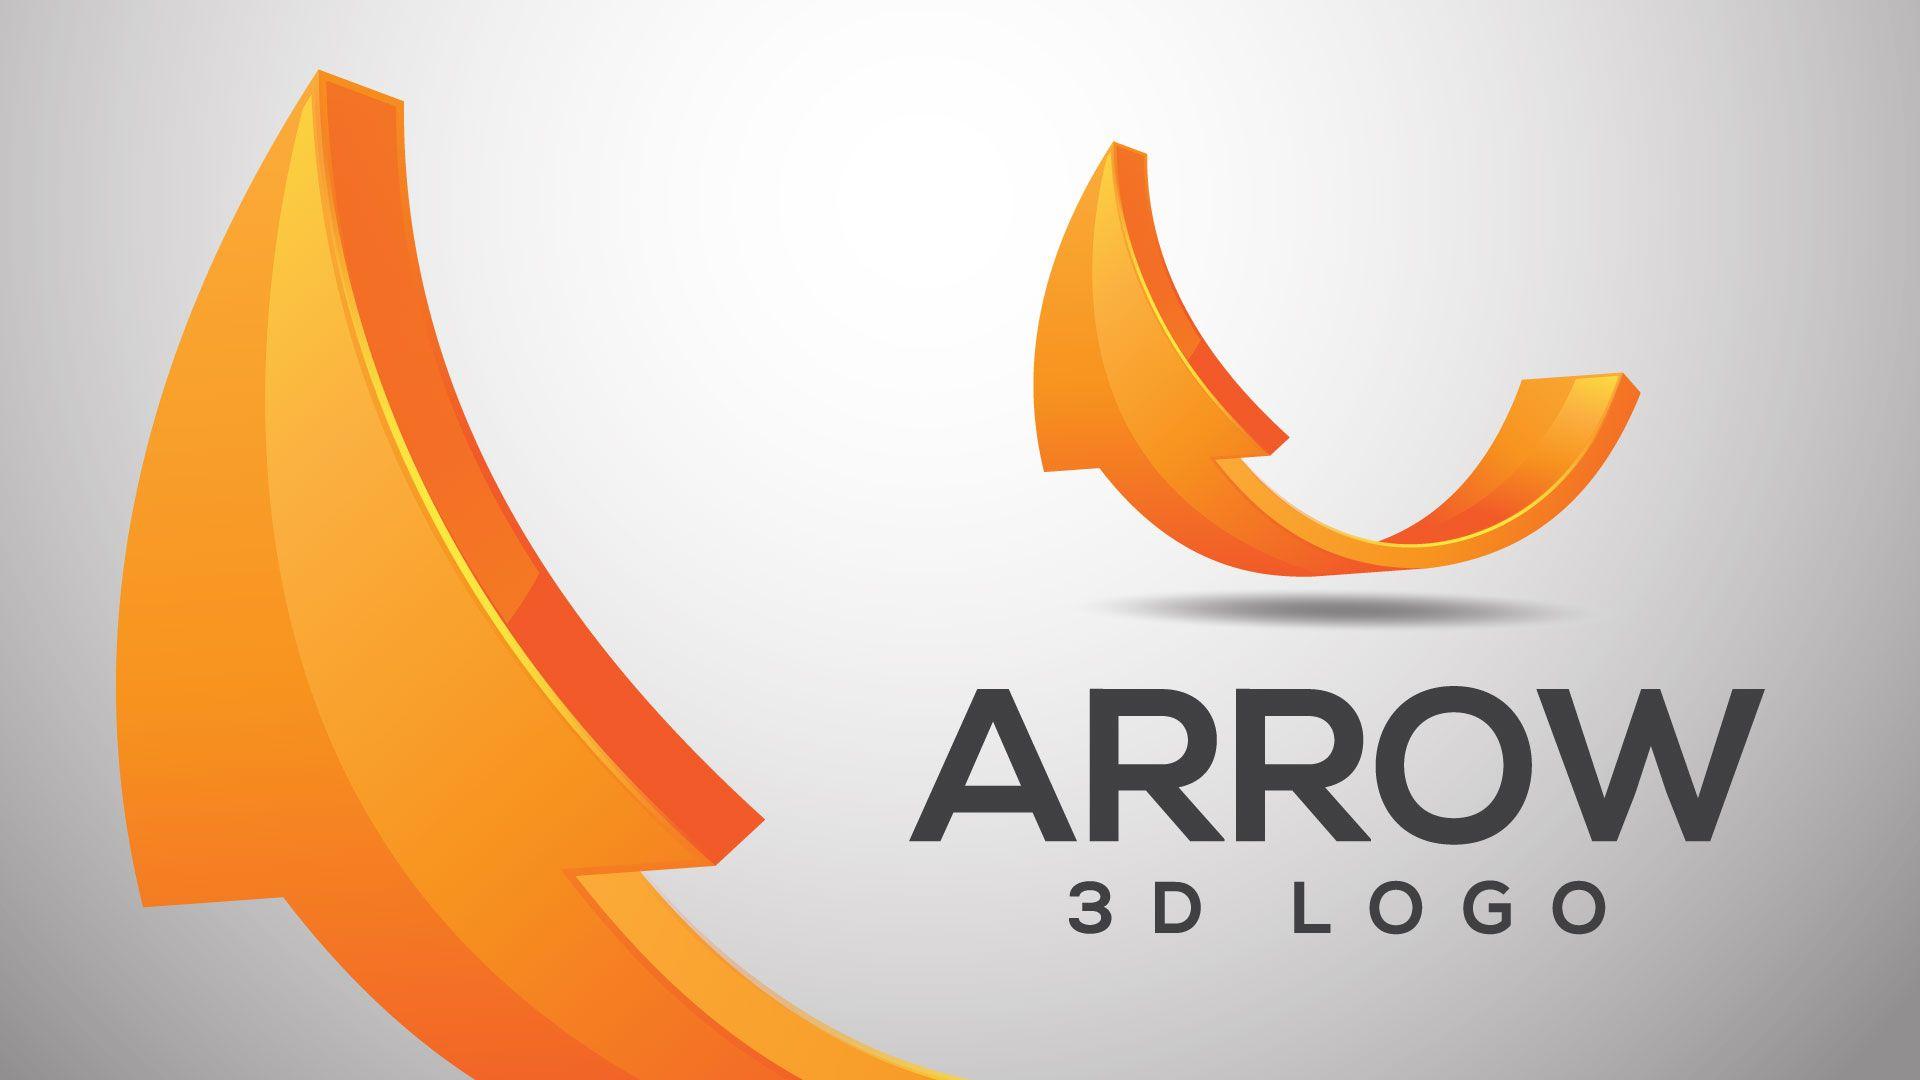 3D Arrow Logo - Adobe Illustrator Tutorial: Use Rotate tool to create 3D Hexagon ...